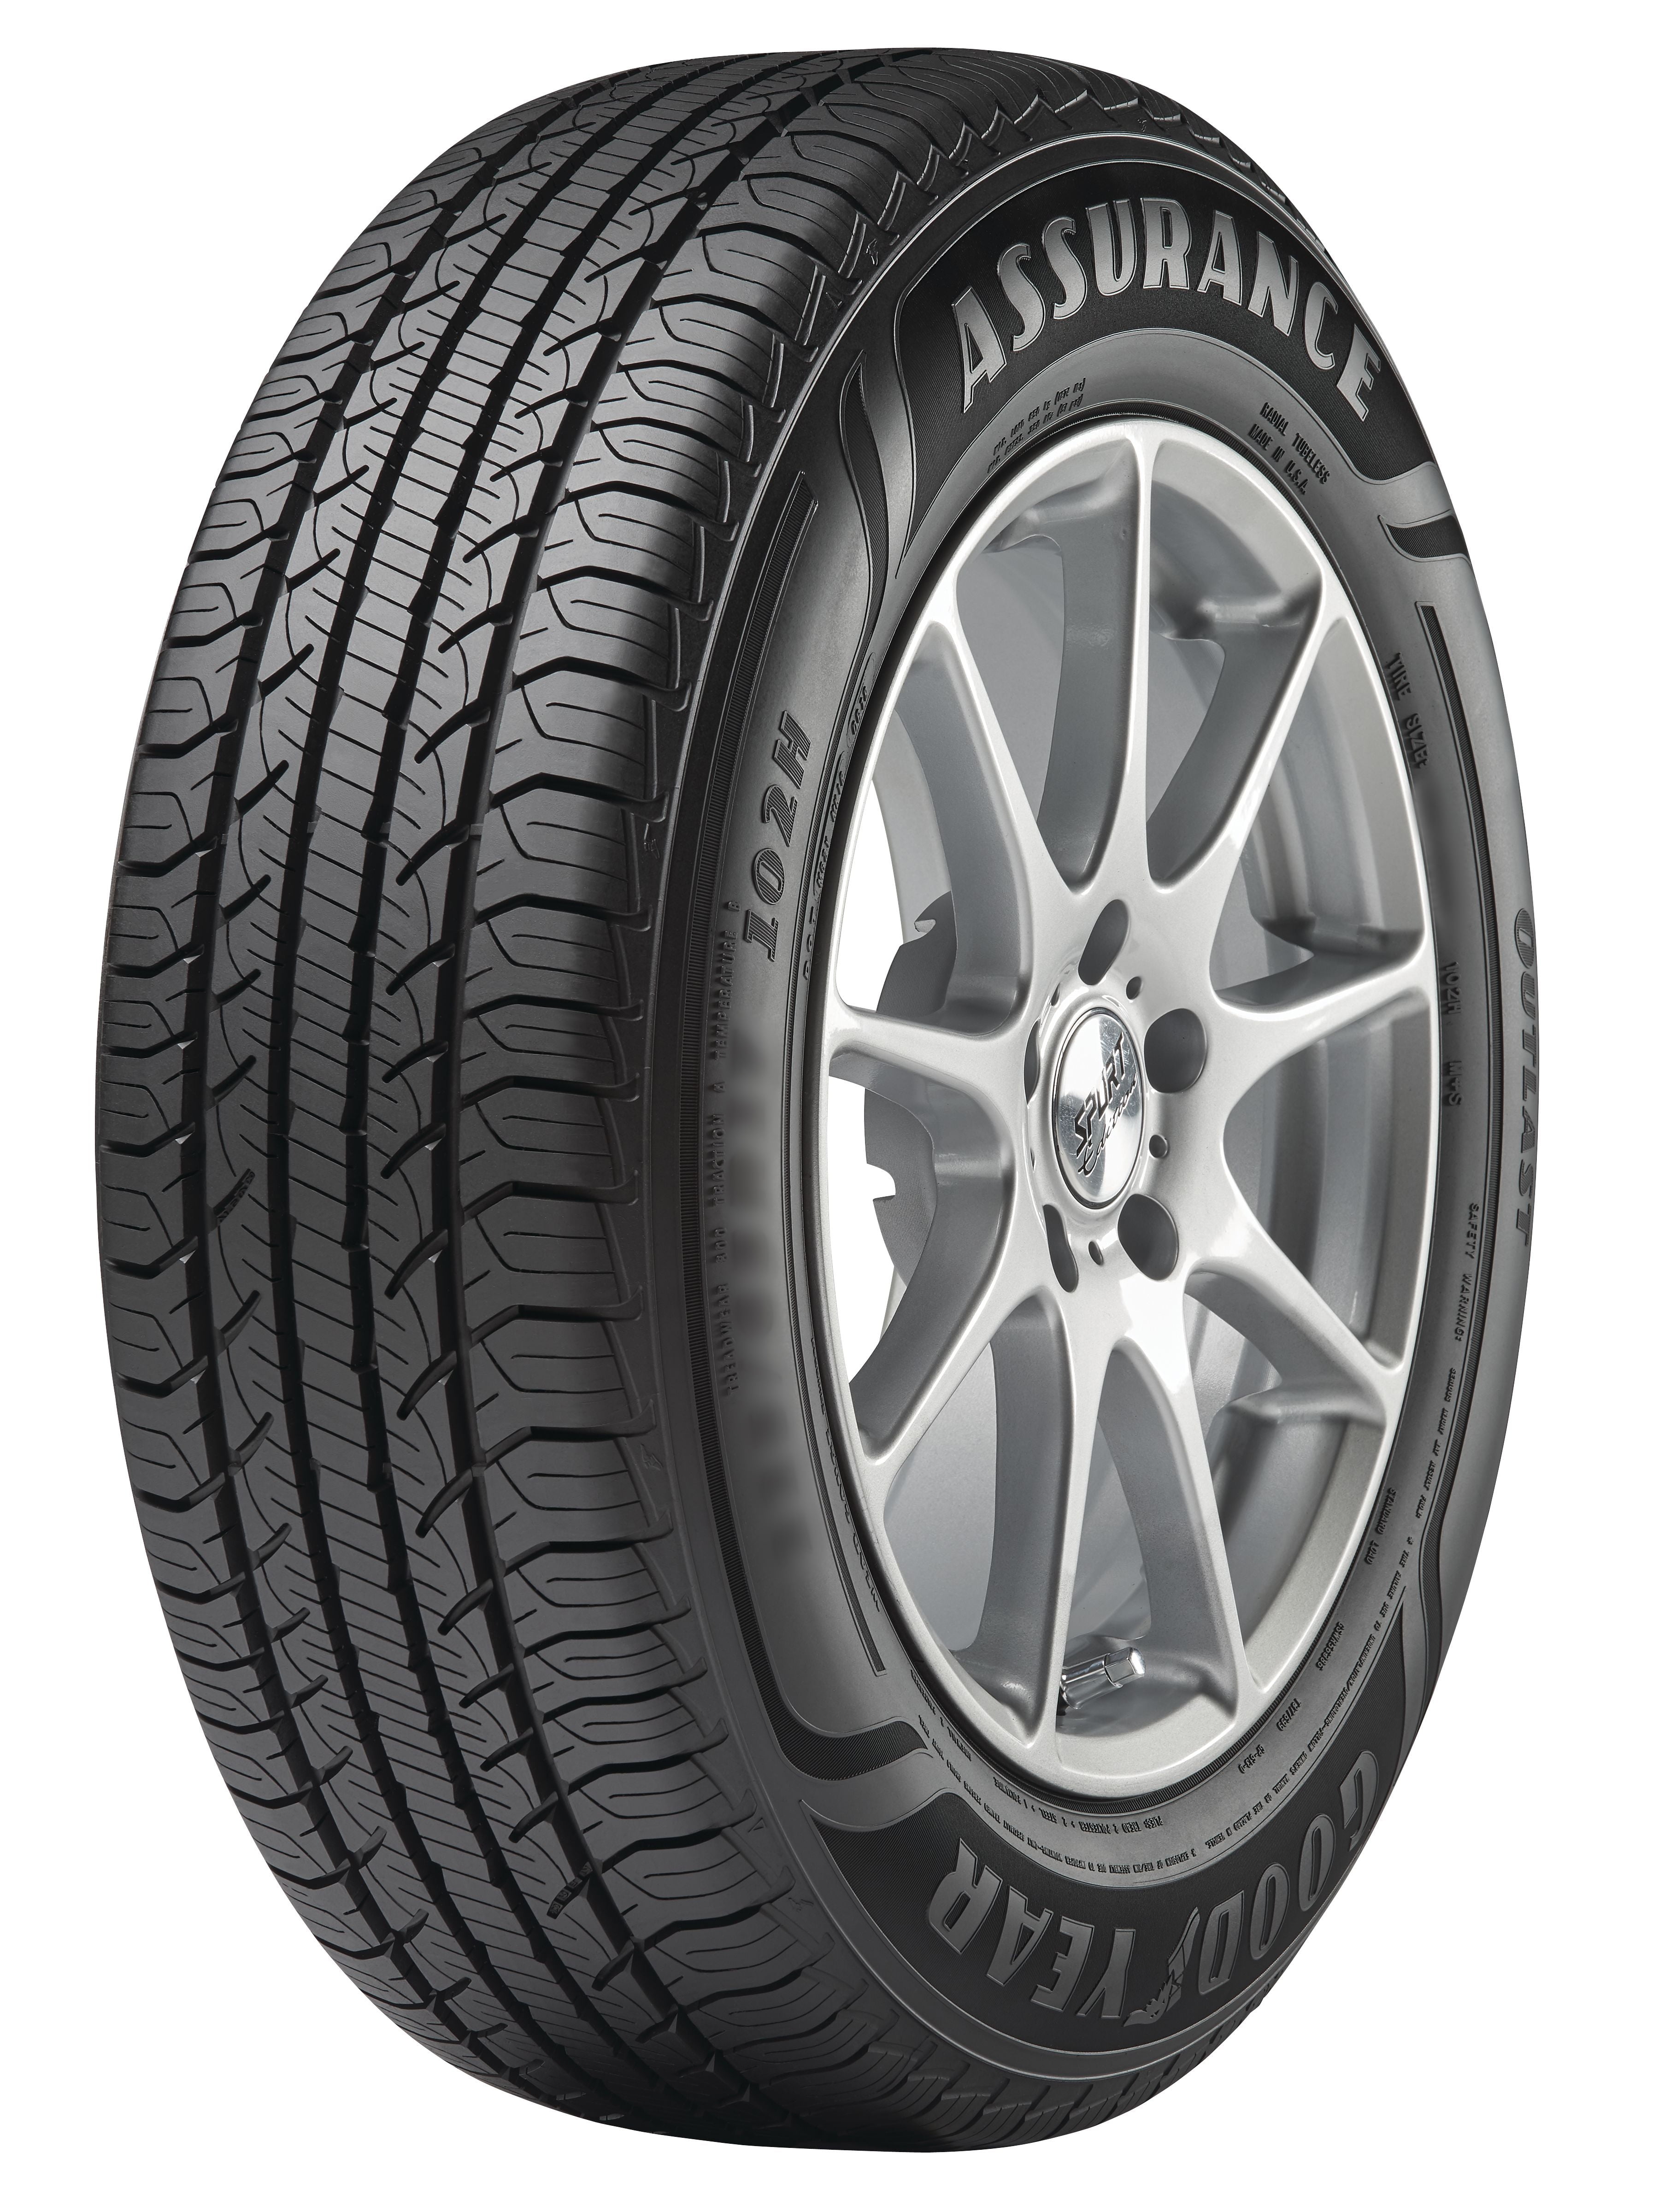 95H 205/65R16 Outlast All-Season Goodyear Tire Assurance